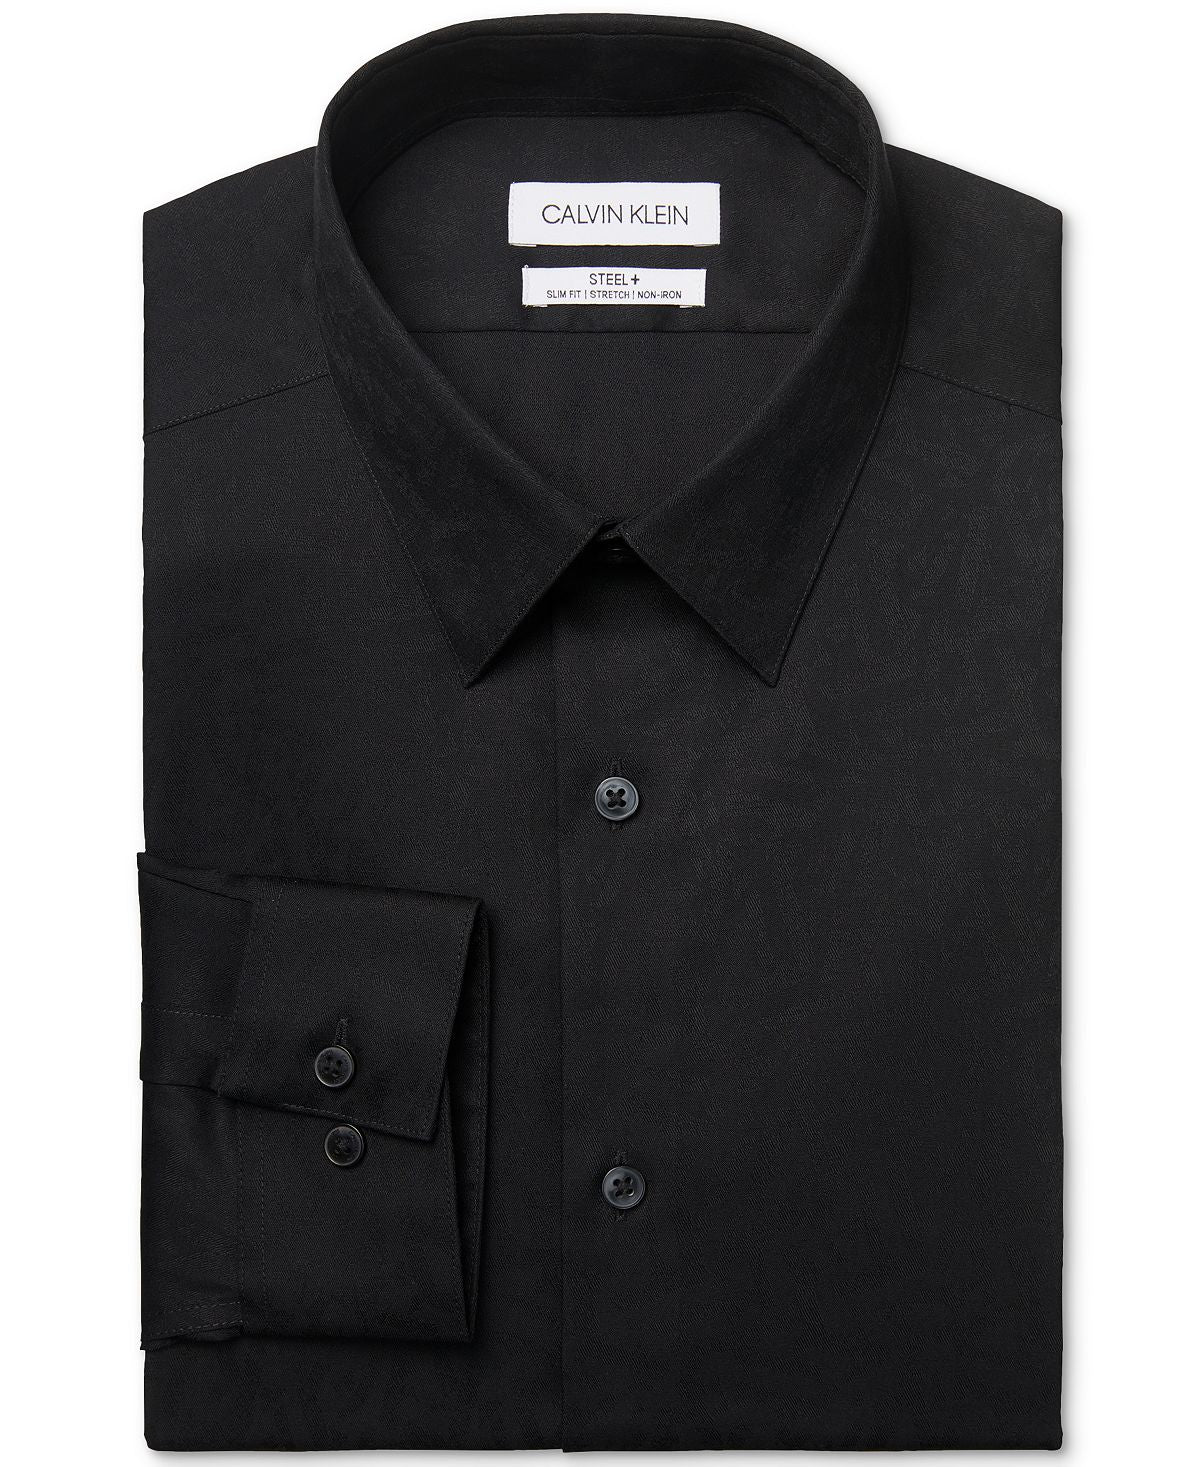 Calvin Klein Steel Slim-fit Non-iron Performance Stretch Tonal Jacquard Dress Shirt Black